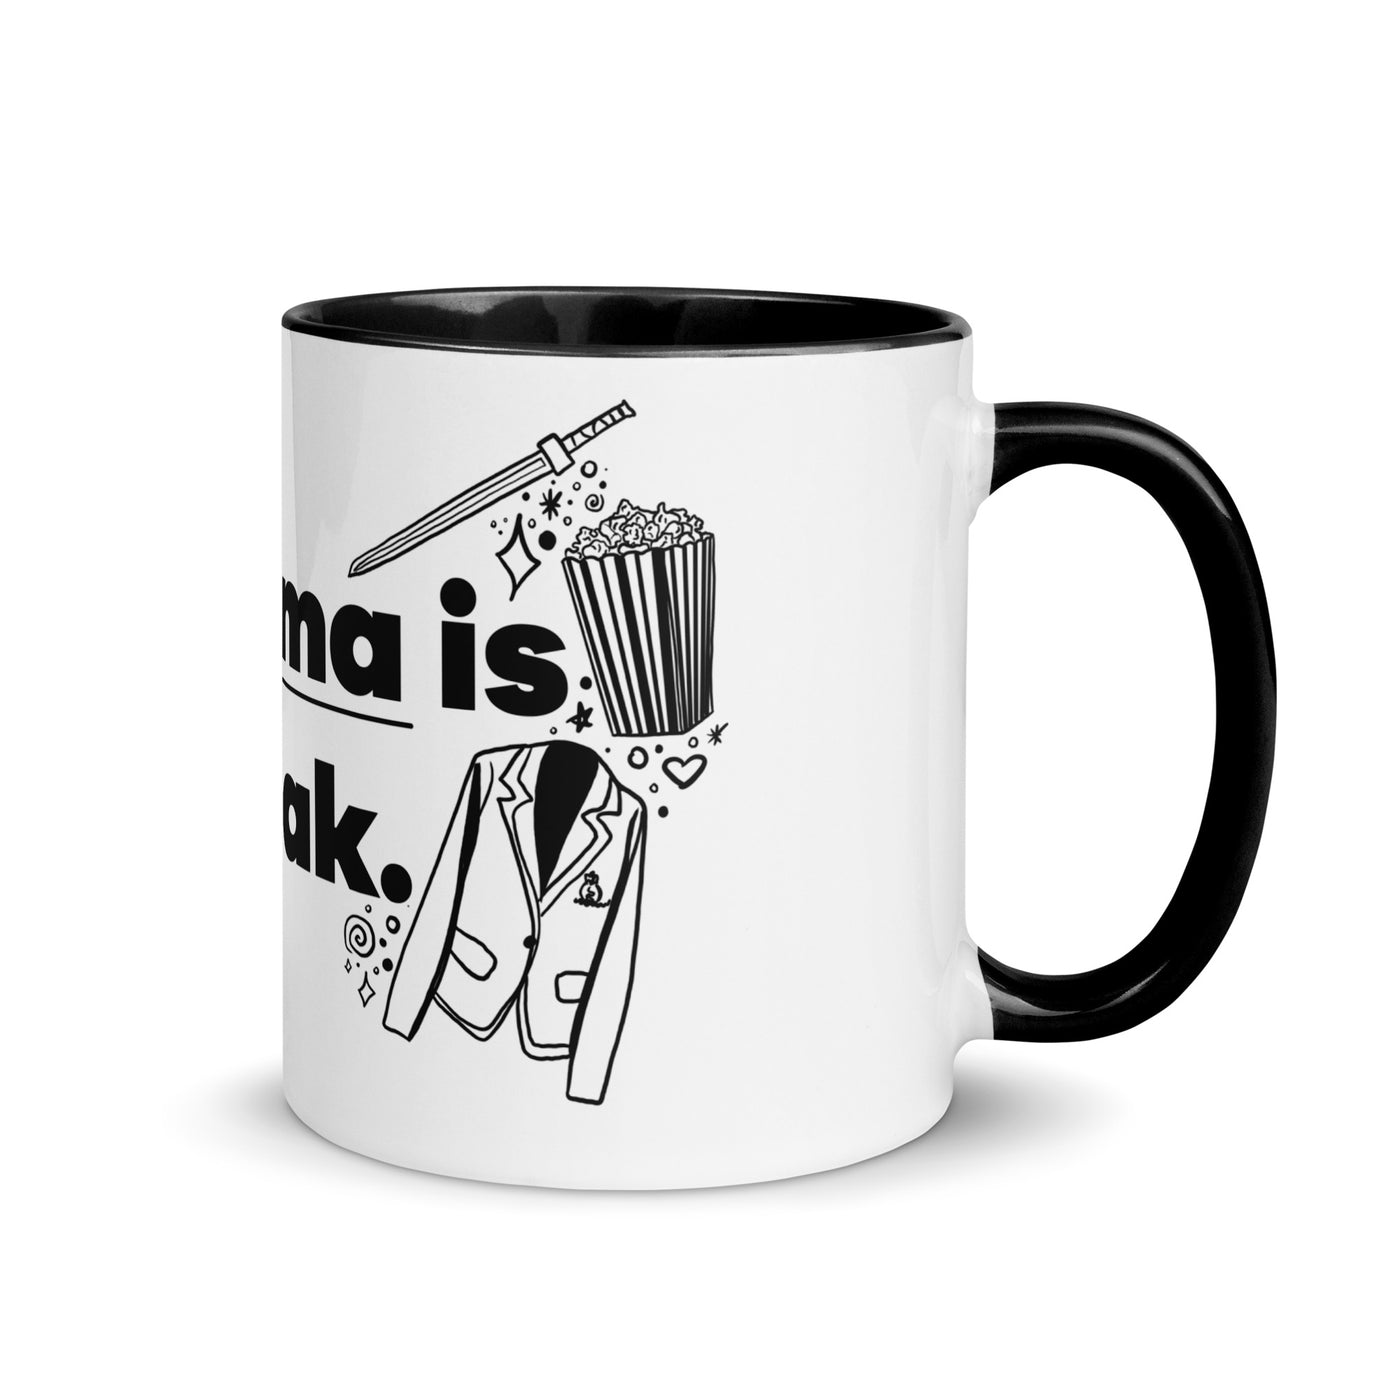 KDrama is Daebak Coffee Mug